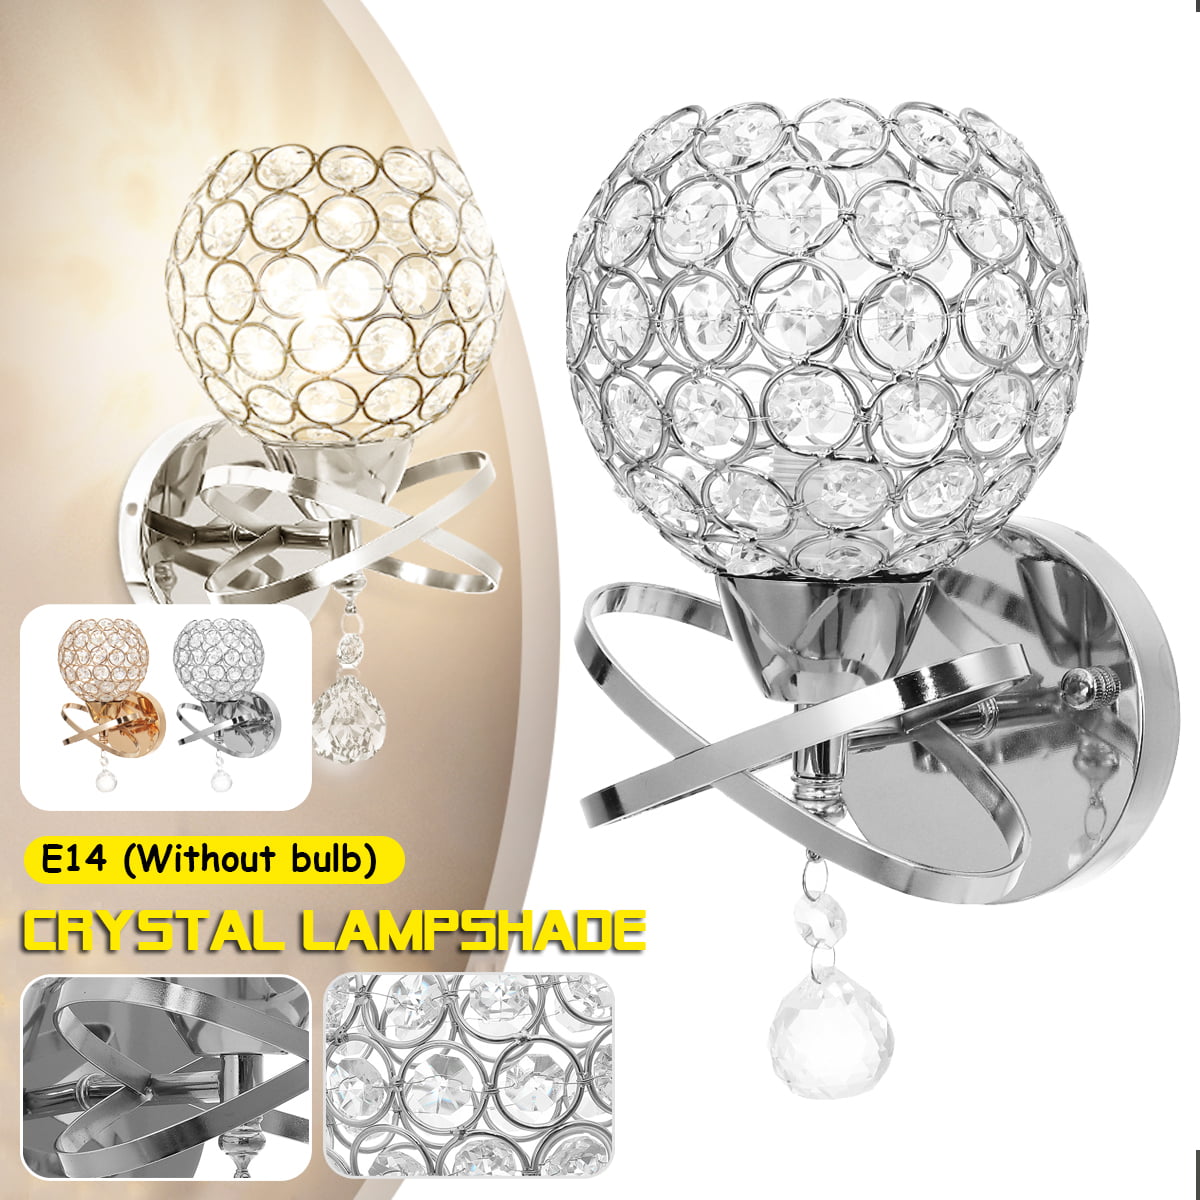 2x LED Crystal Wall Sconce Light Bulb Bedroom Bedside Lighting Lamp w/ 